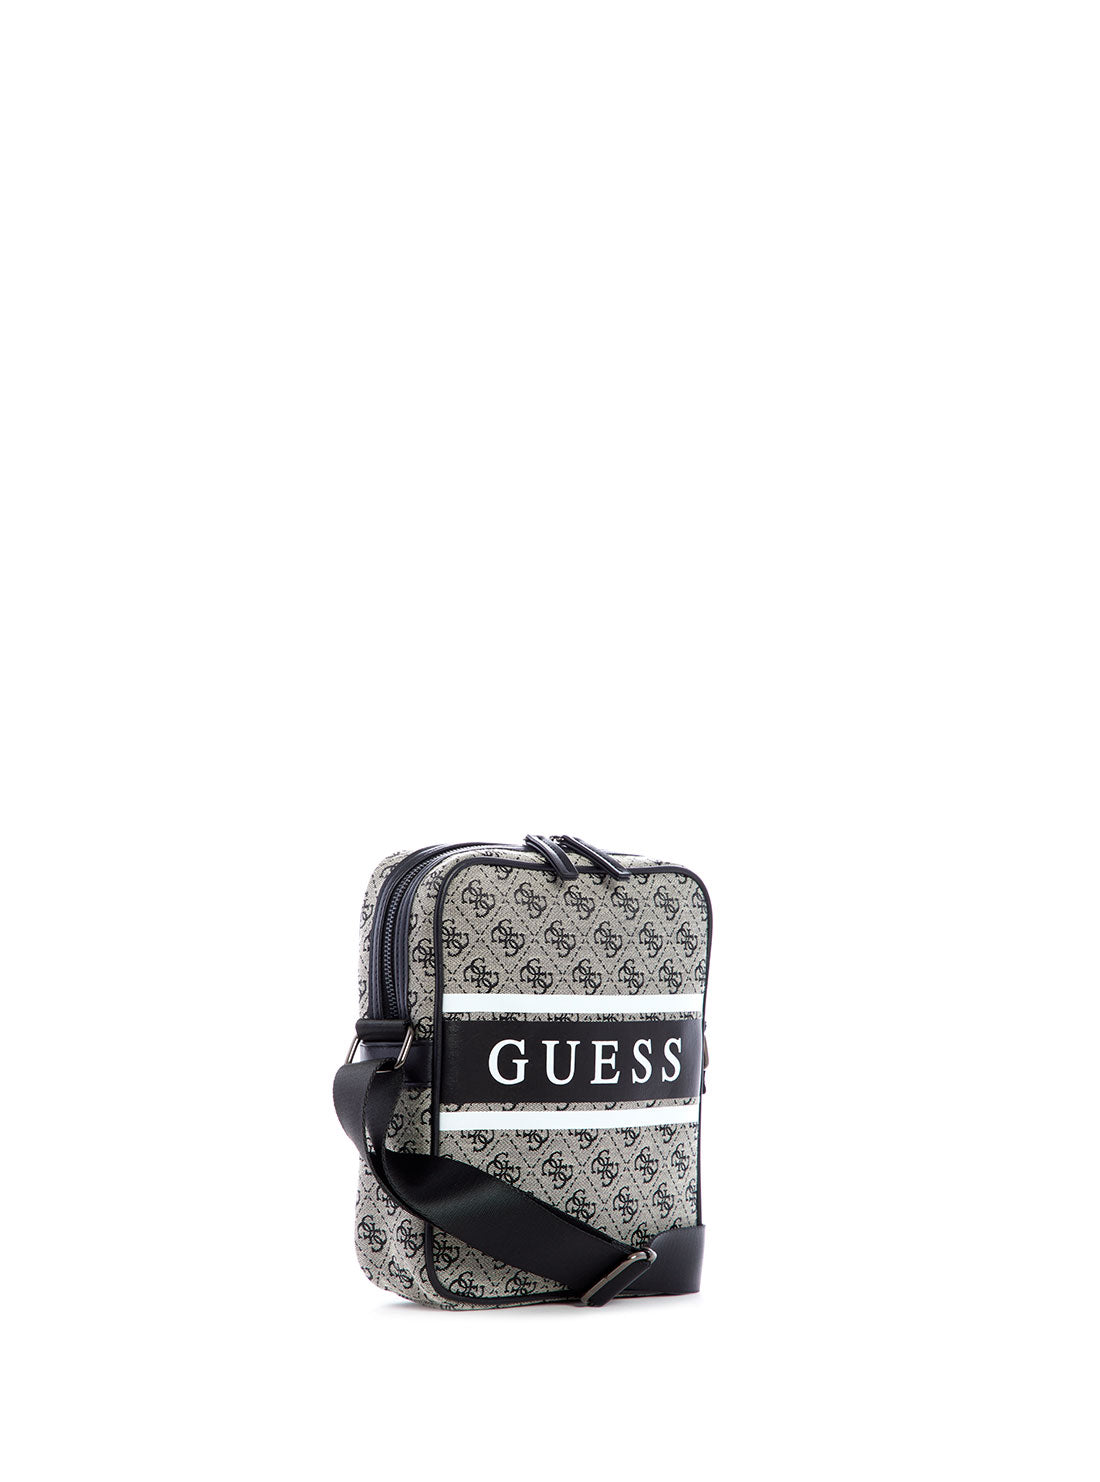 GUESS Grey Represent Crossbody Bag side view